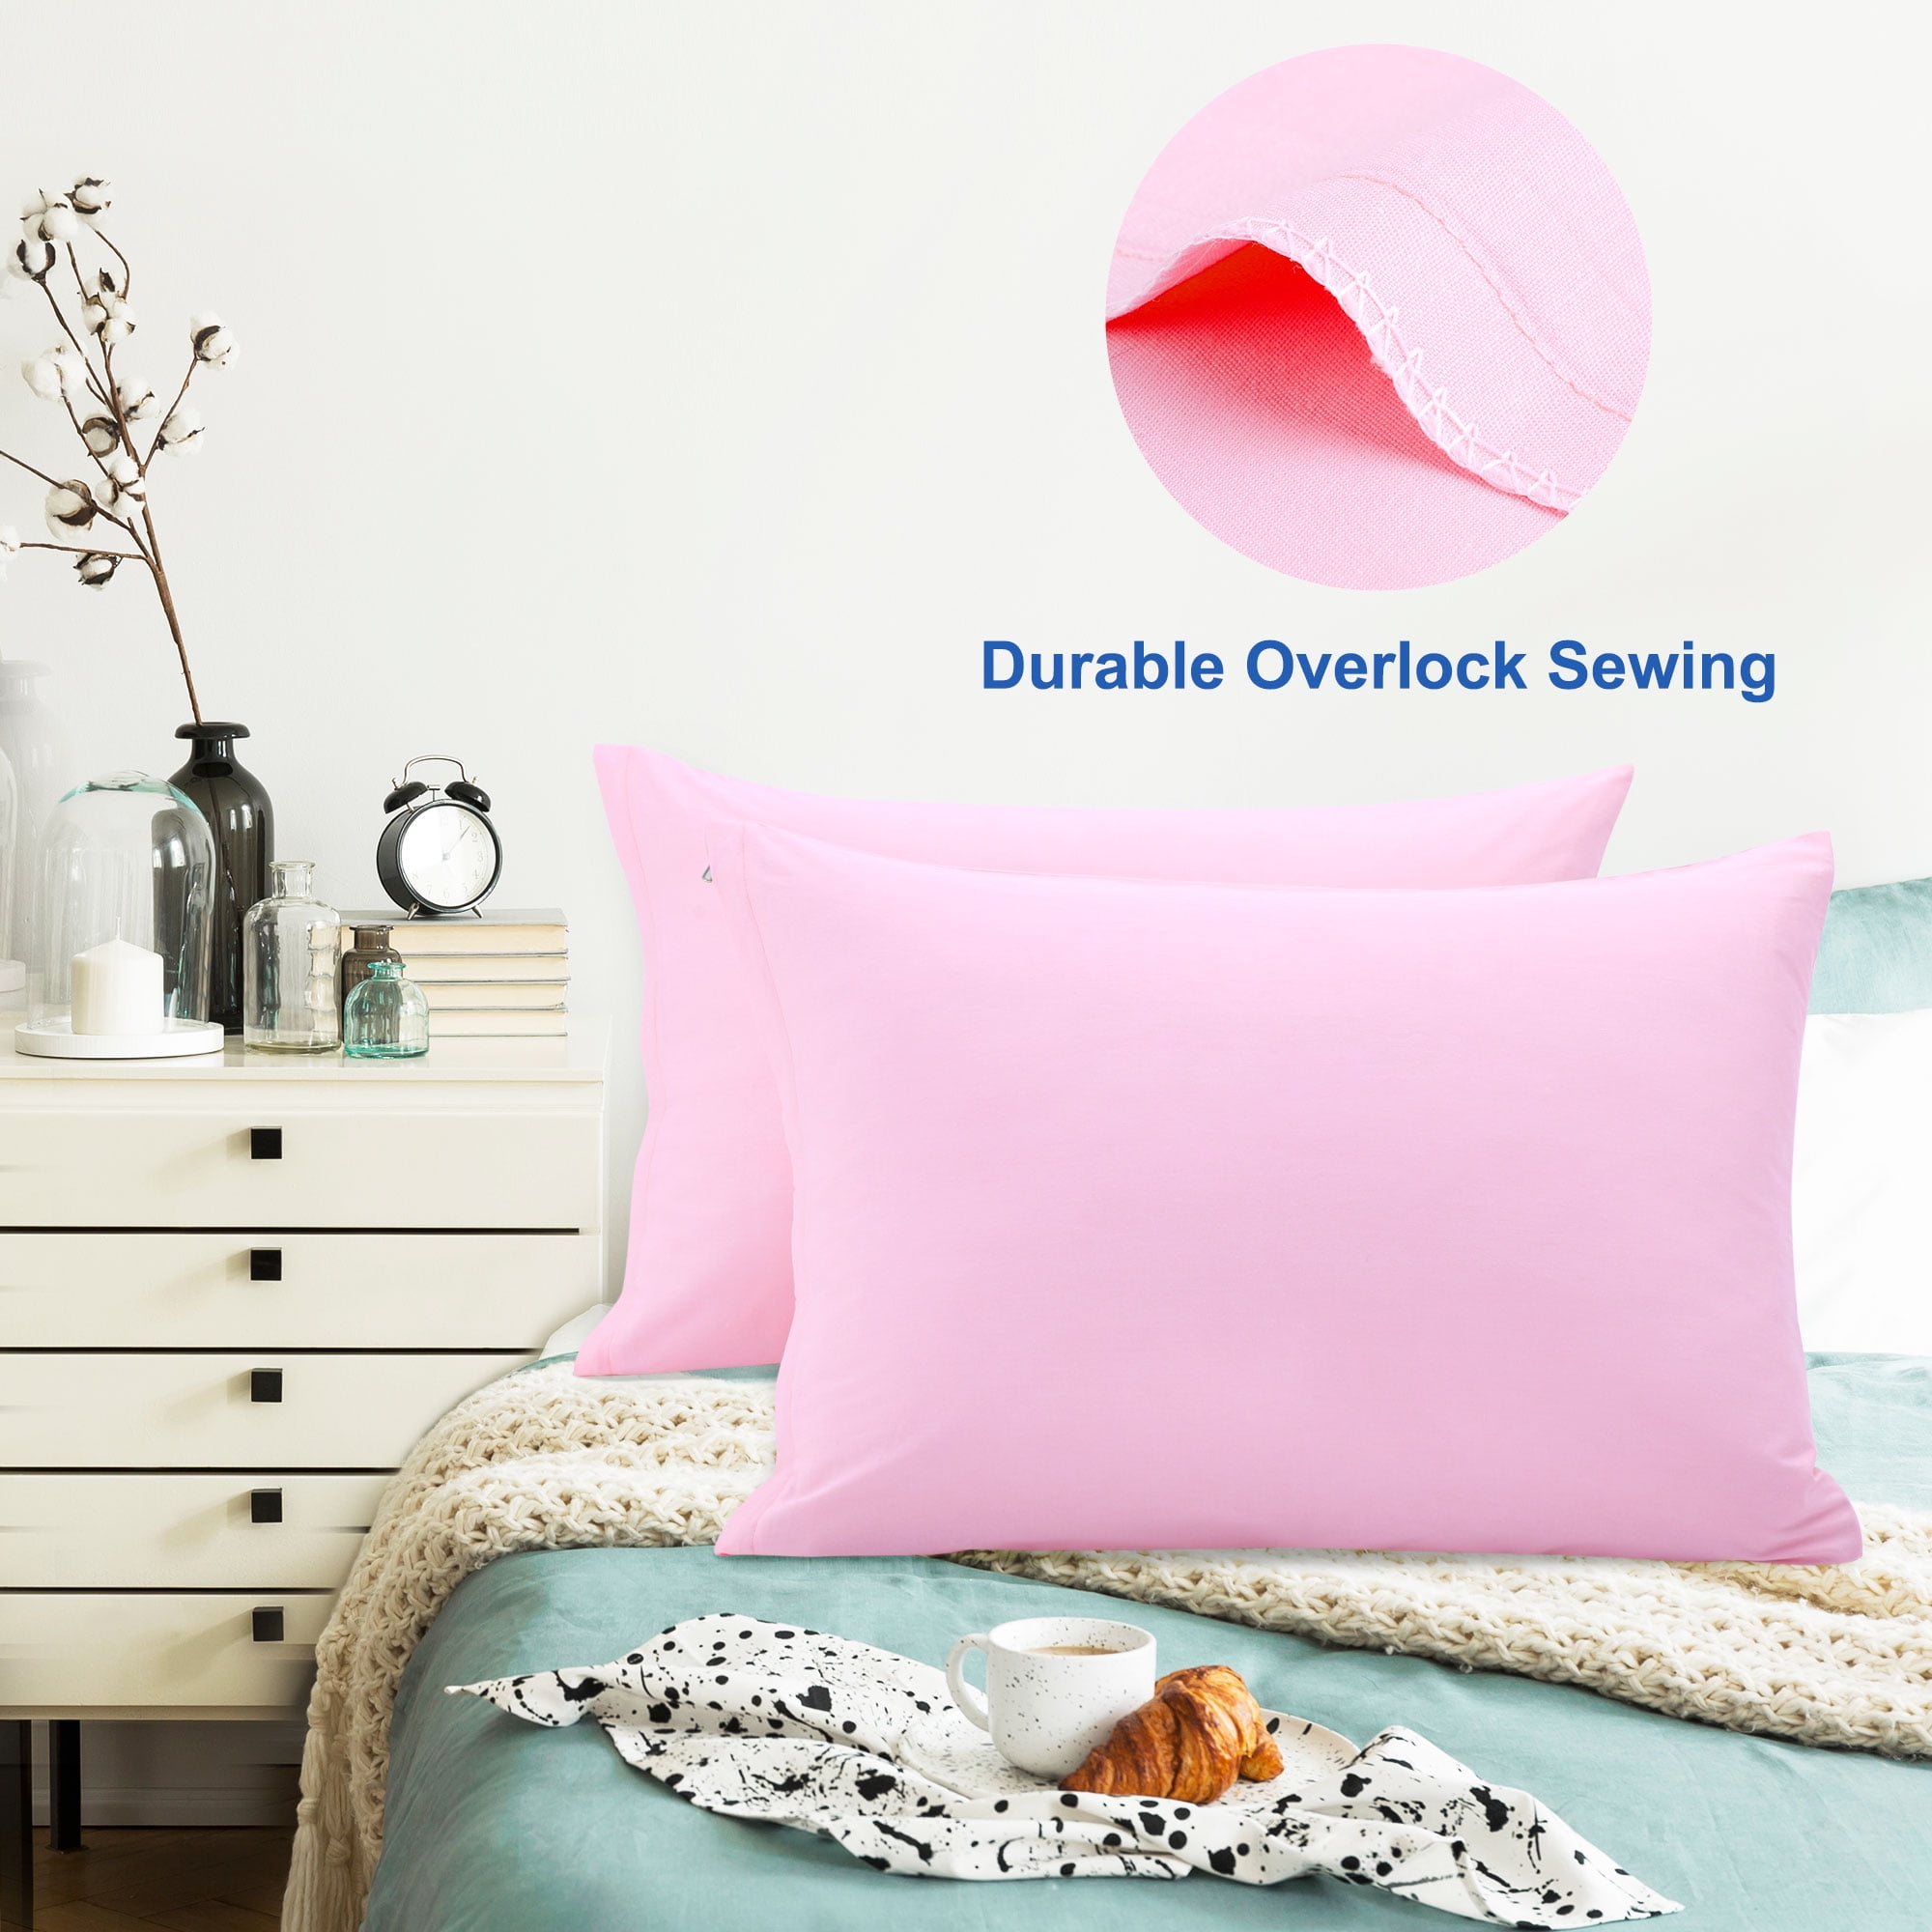 Shunjie.Home 100% Egyptian Cotton Standard Pillow Protectors Set